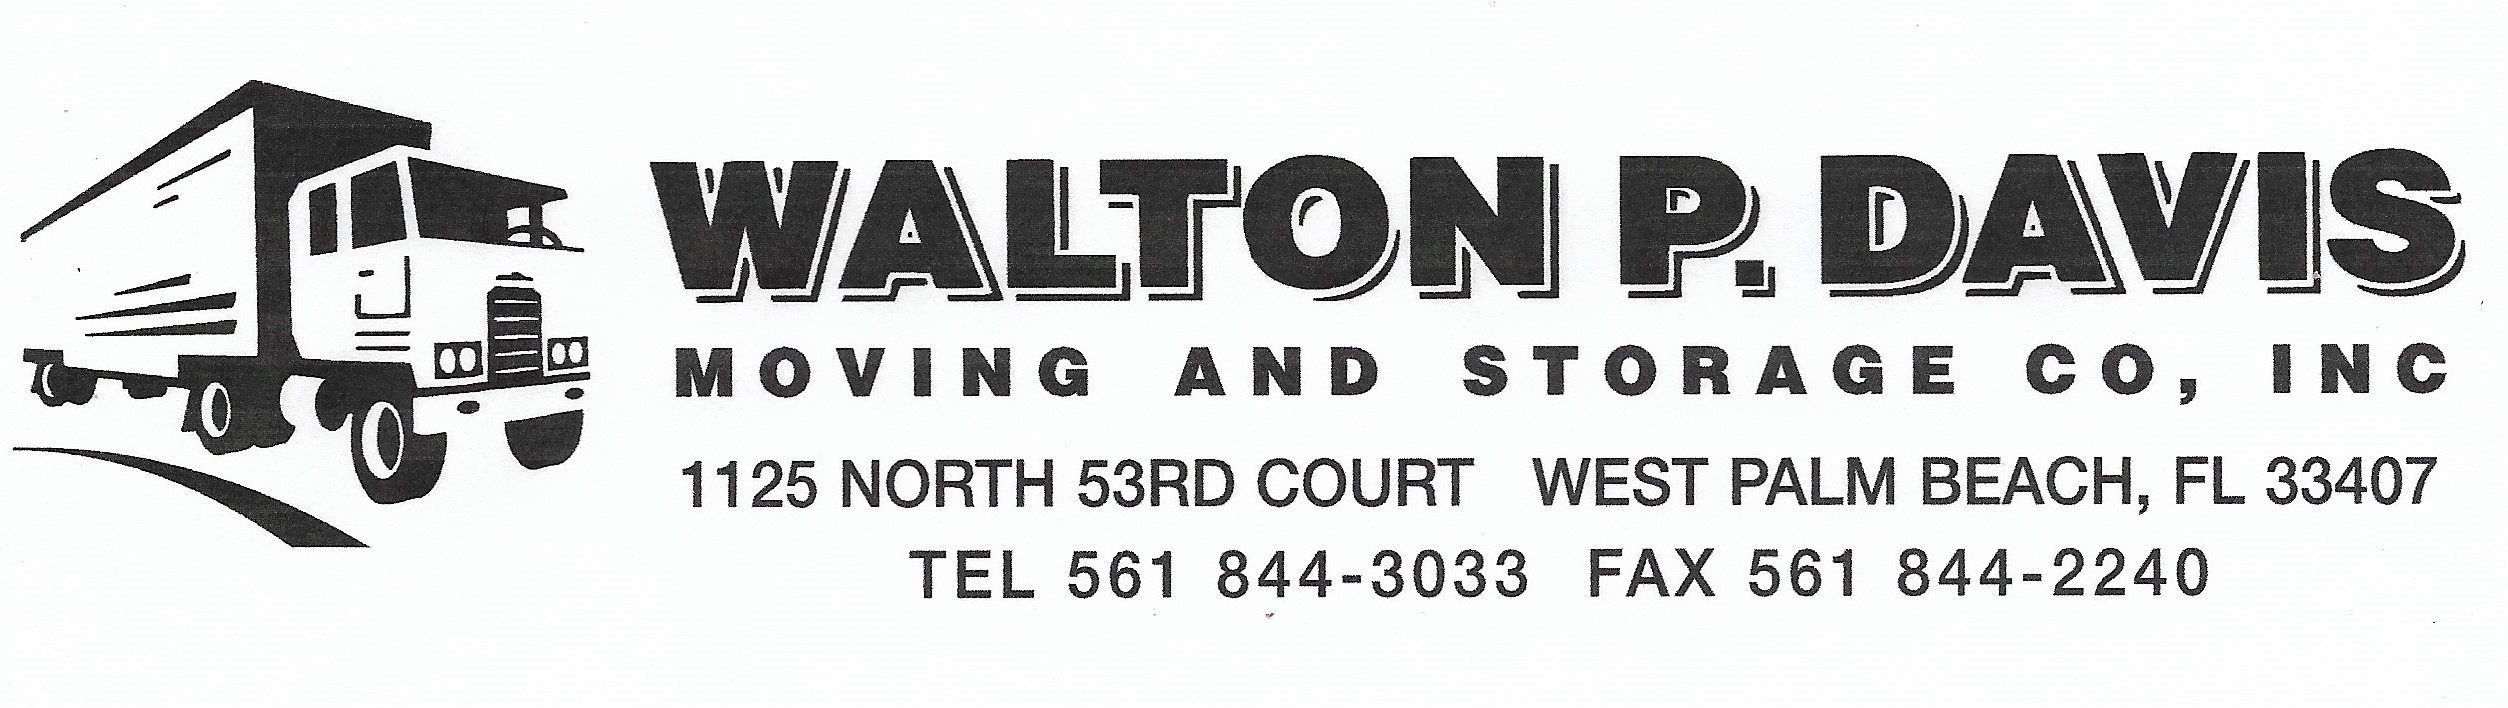 Walton P. Davis Moving & Storage Co, Inc.